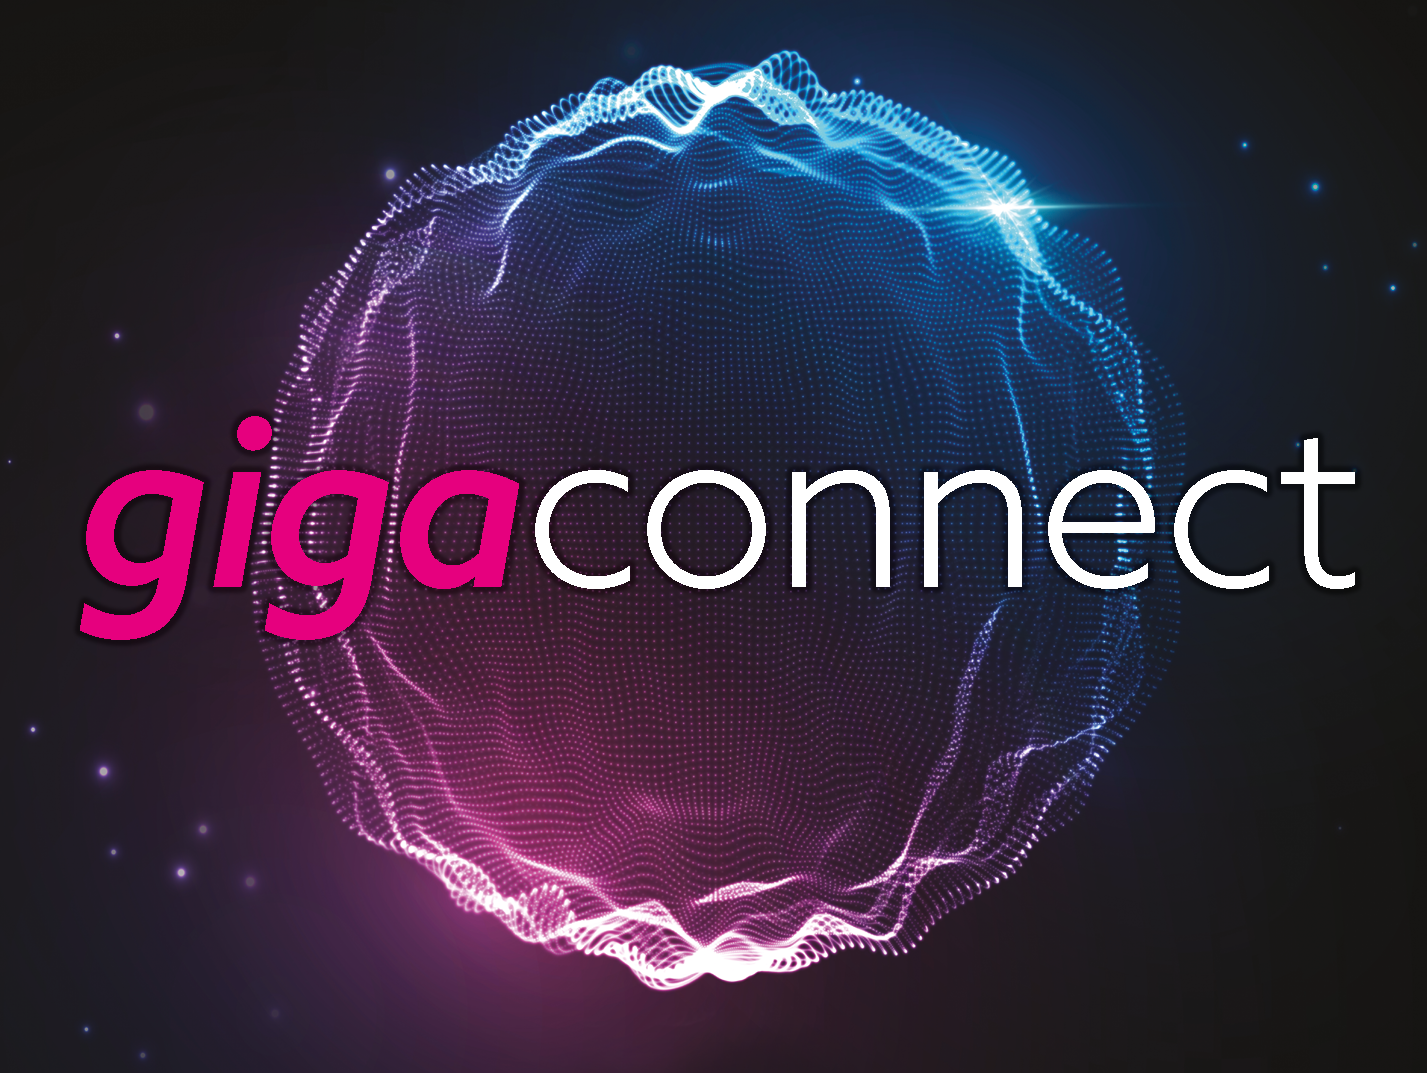 Giga connect image